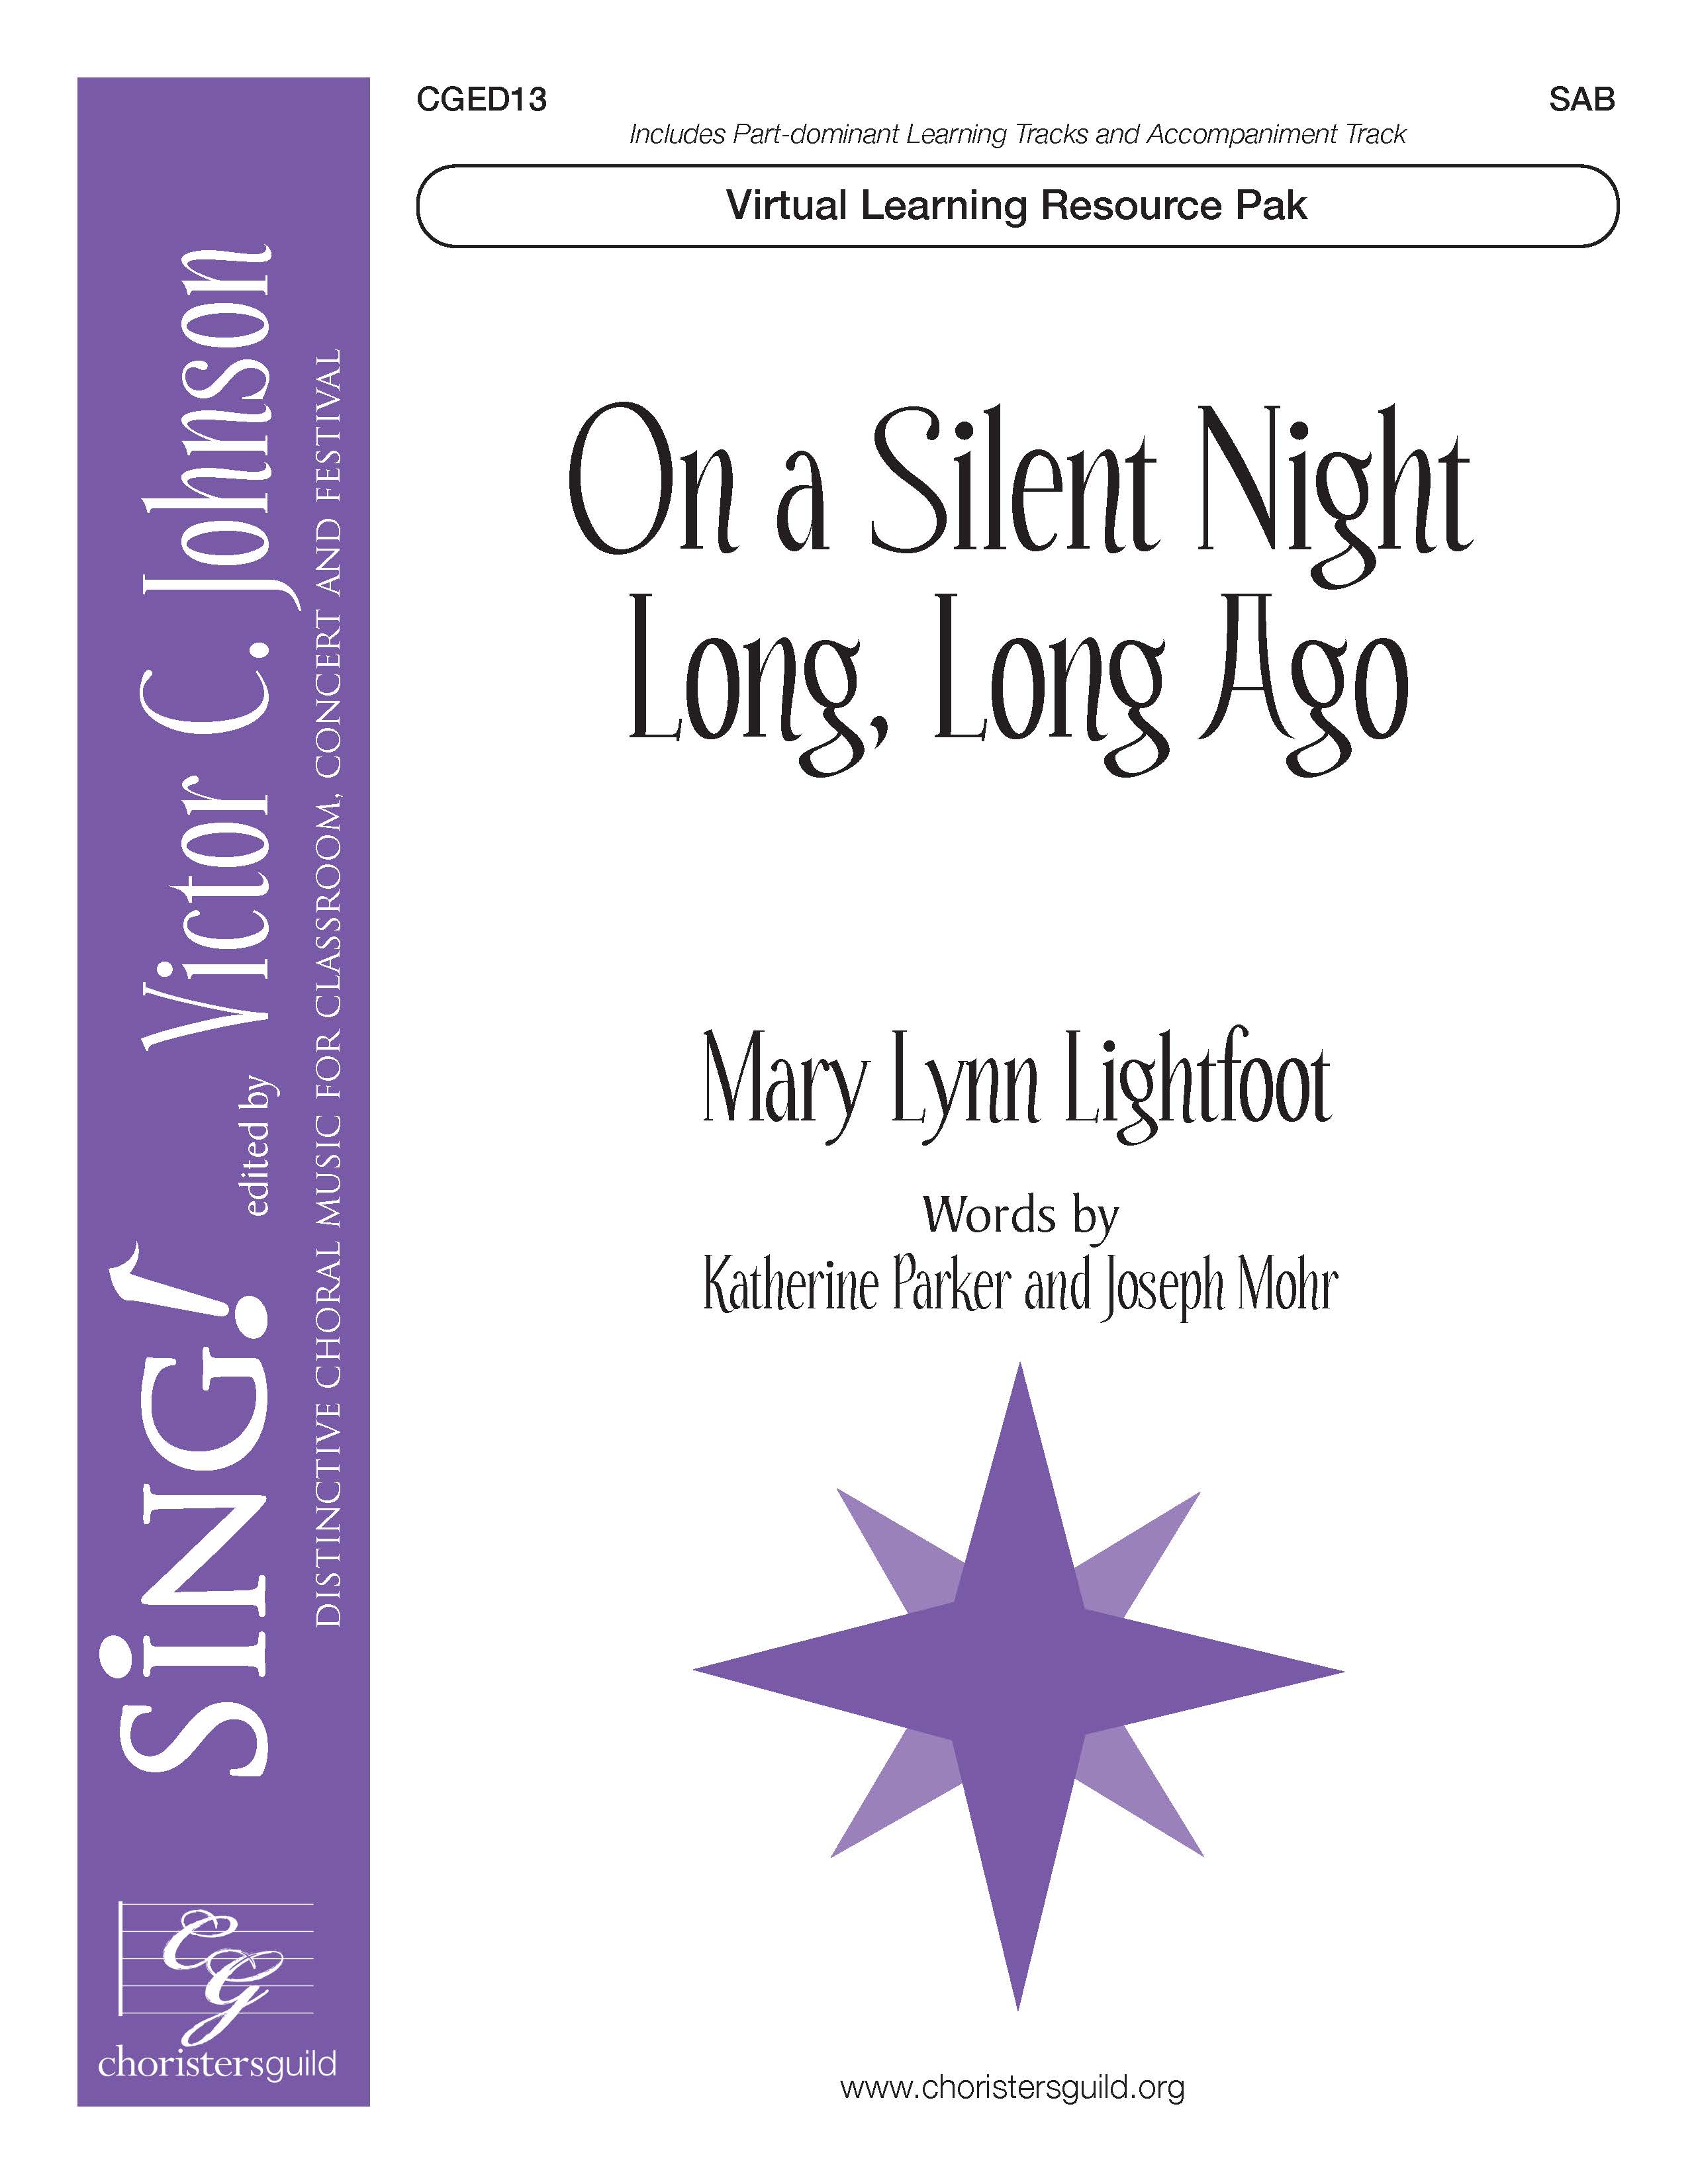 On a Silent Night Long, Long Ago (Virtual Learning Resource Pak) - SAB